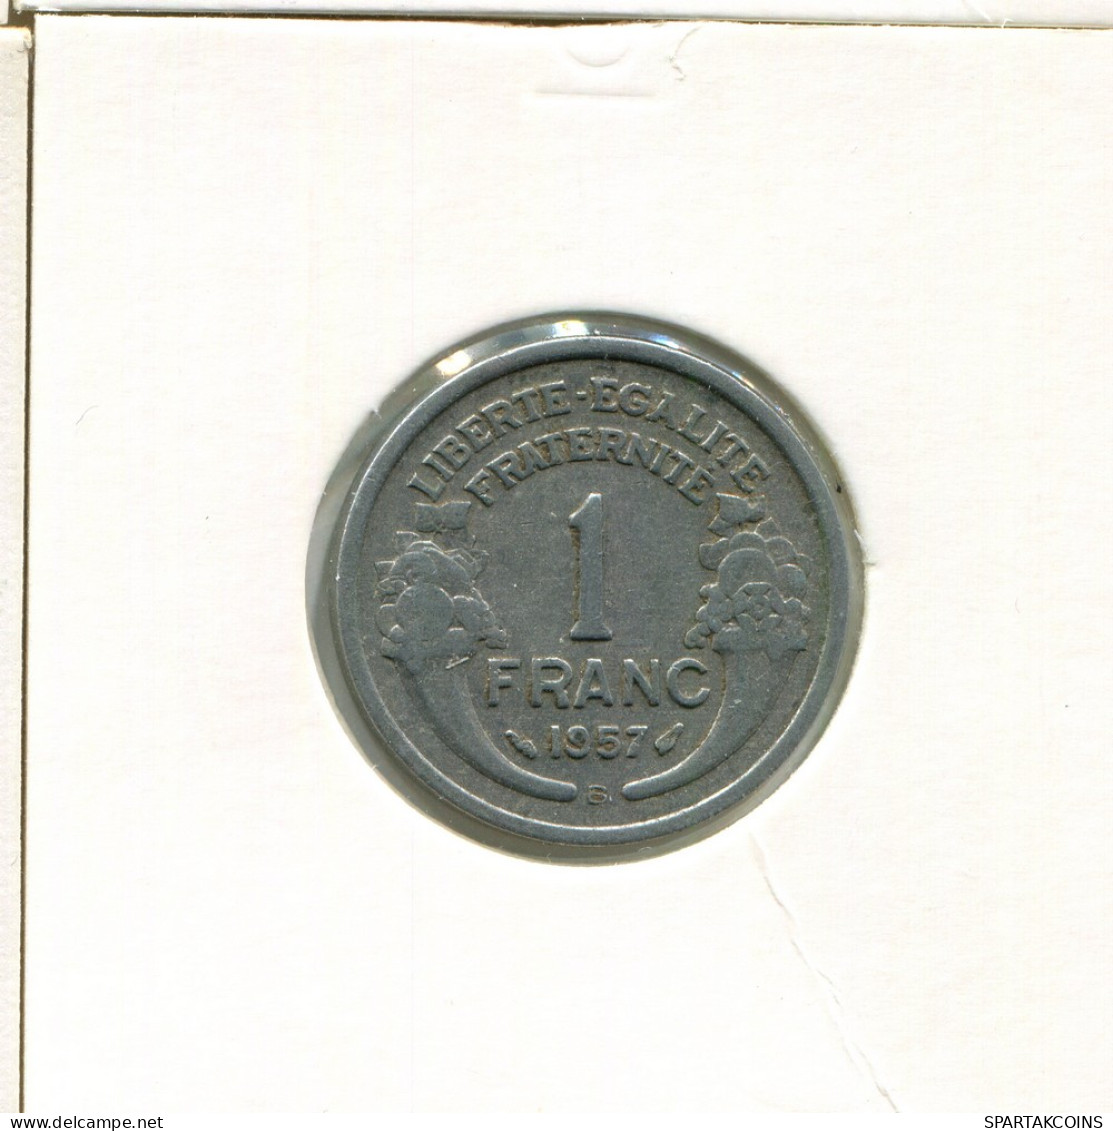 1 FRANC 1957 B FRANCE Coin French Coin #AK601 - 1 Franc